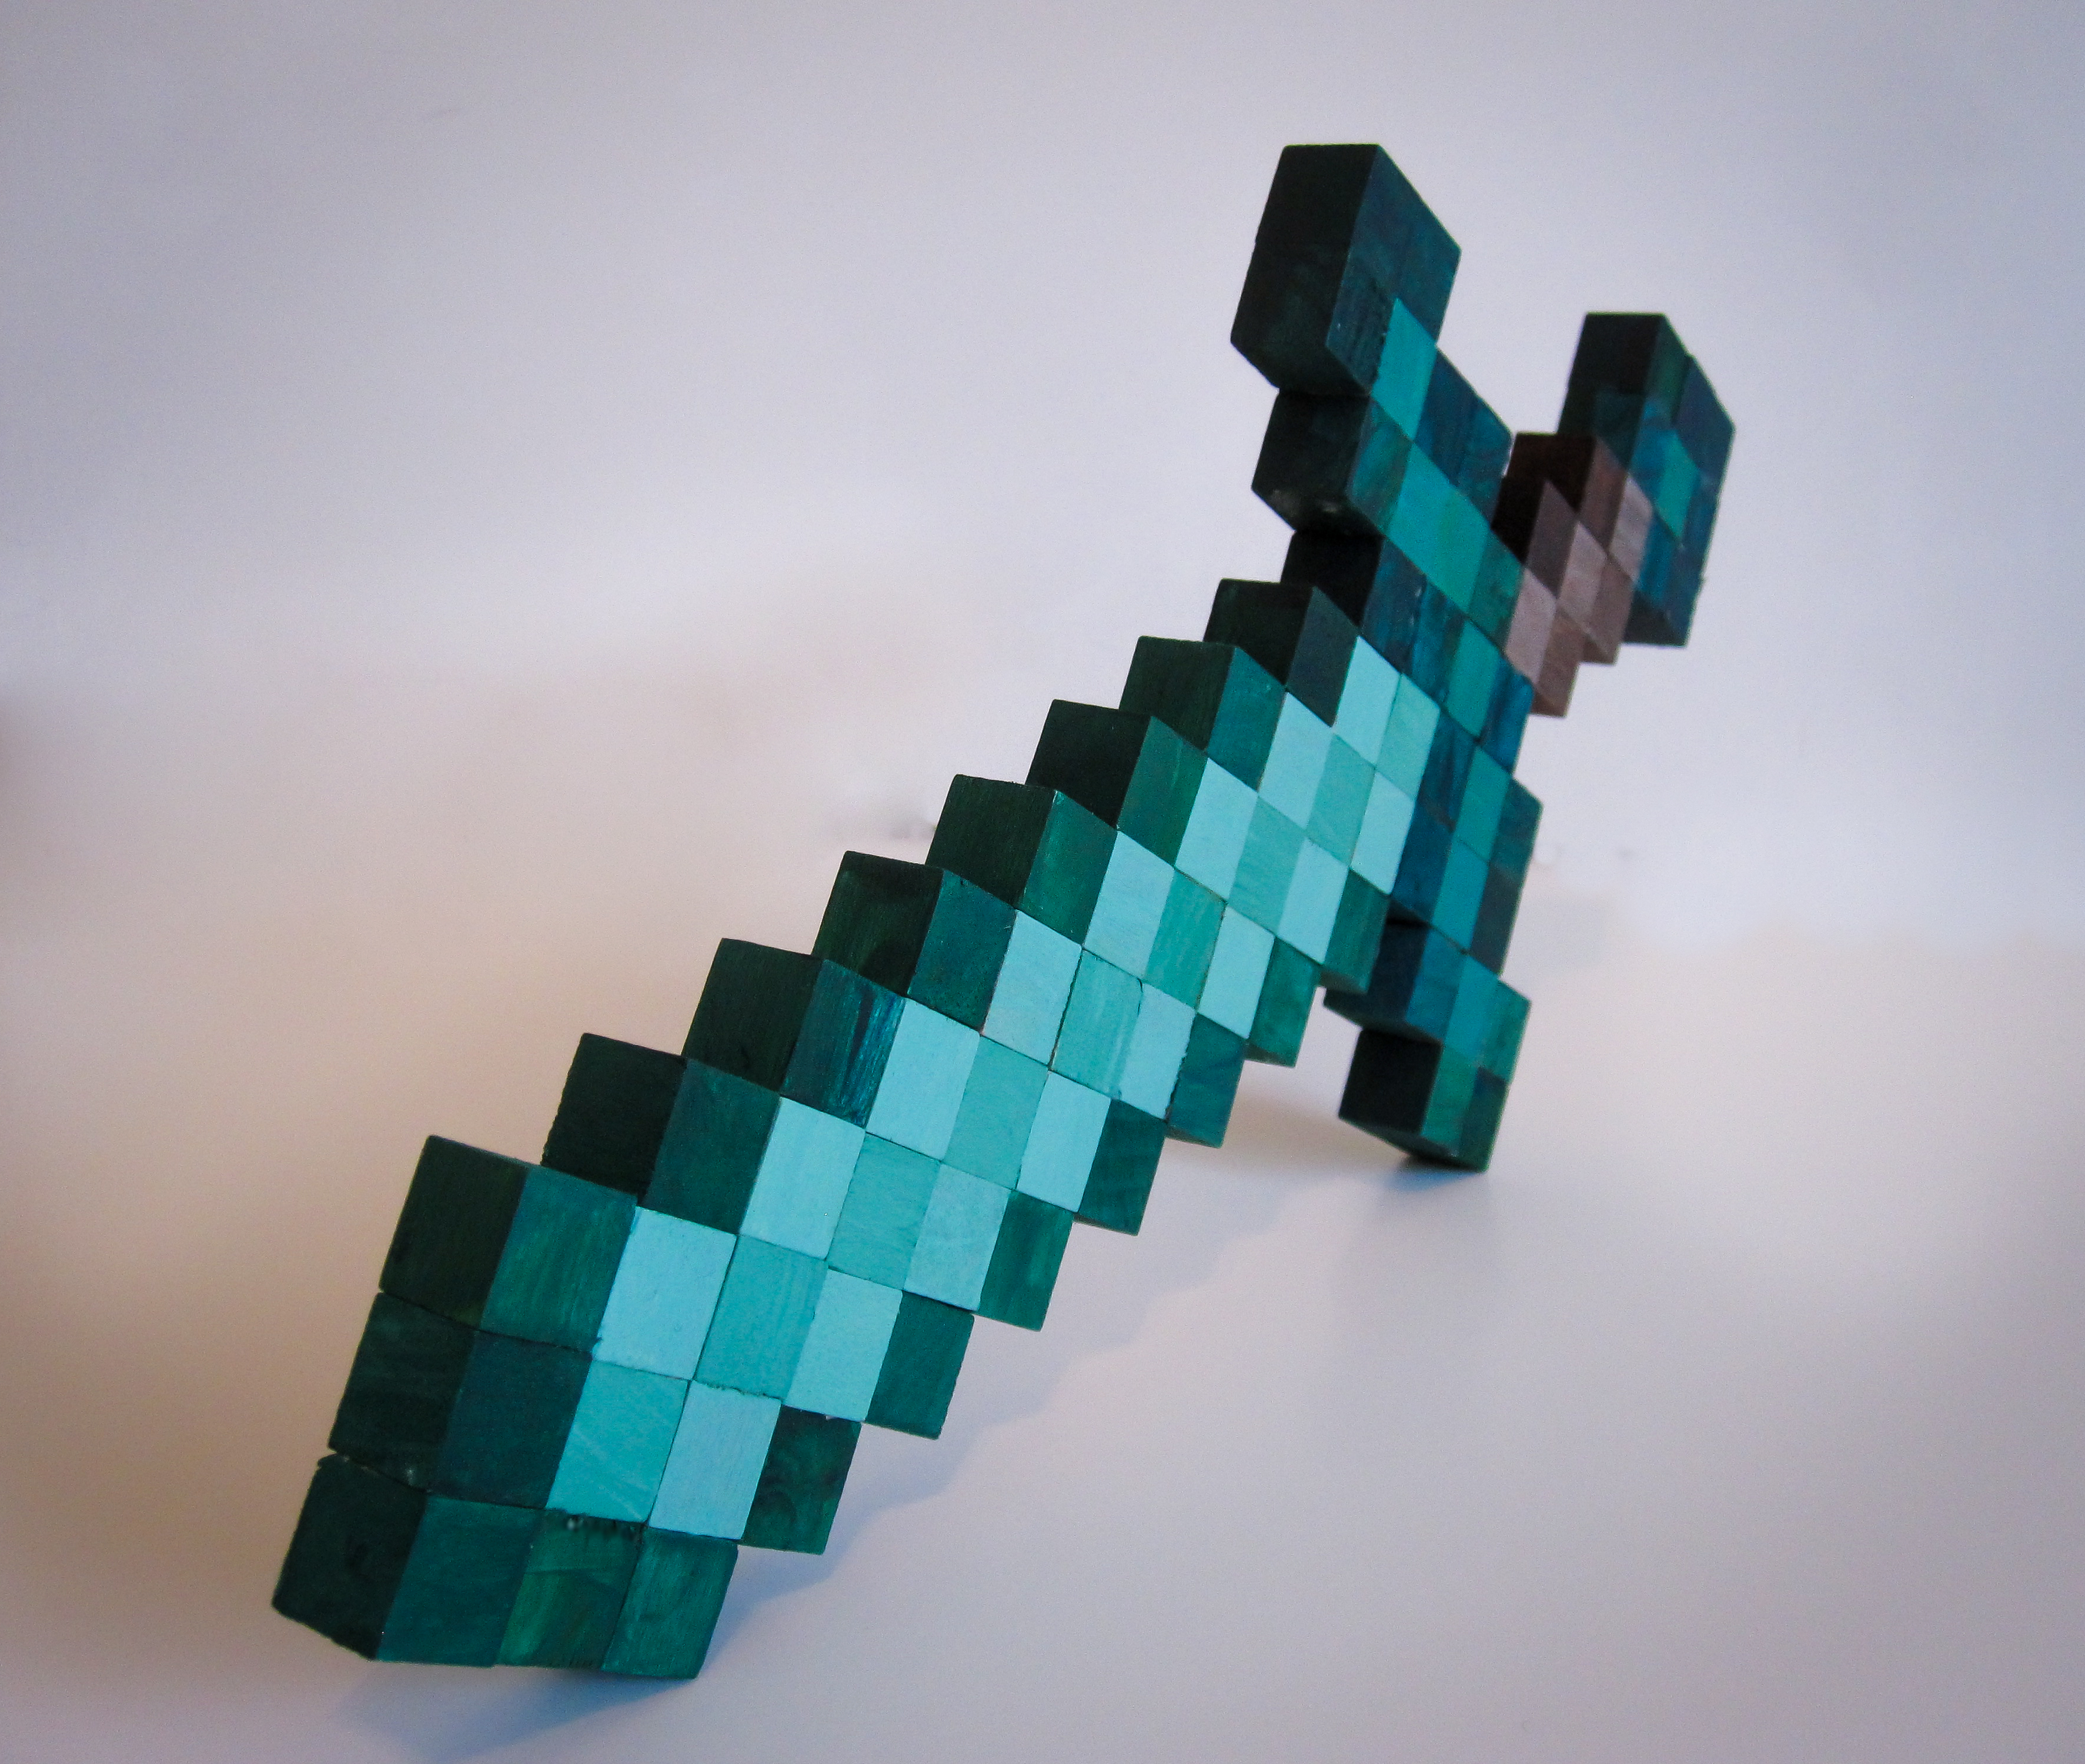 Minecraft “Diamond” Sword